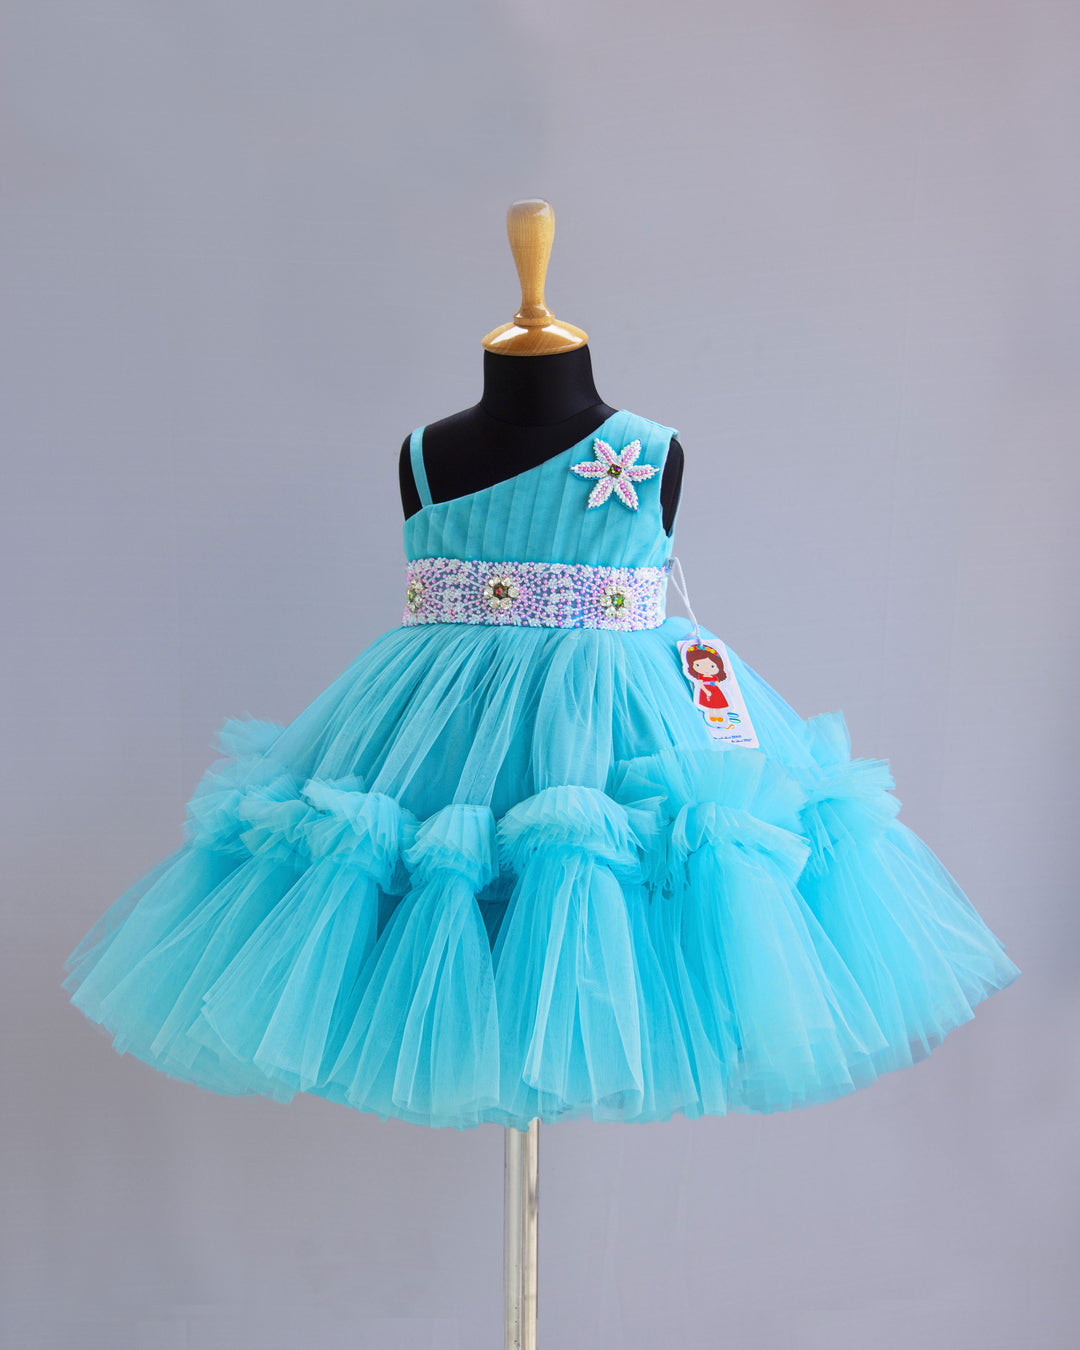 blue frocks for kids online dresses collection latest baby girls birthday dresses trending stanwells kids